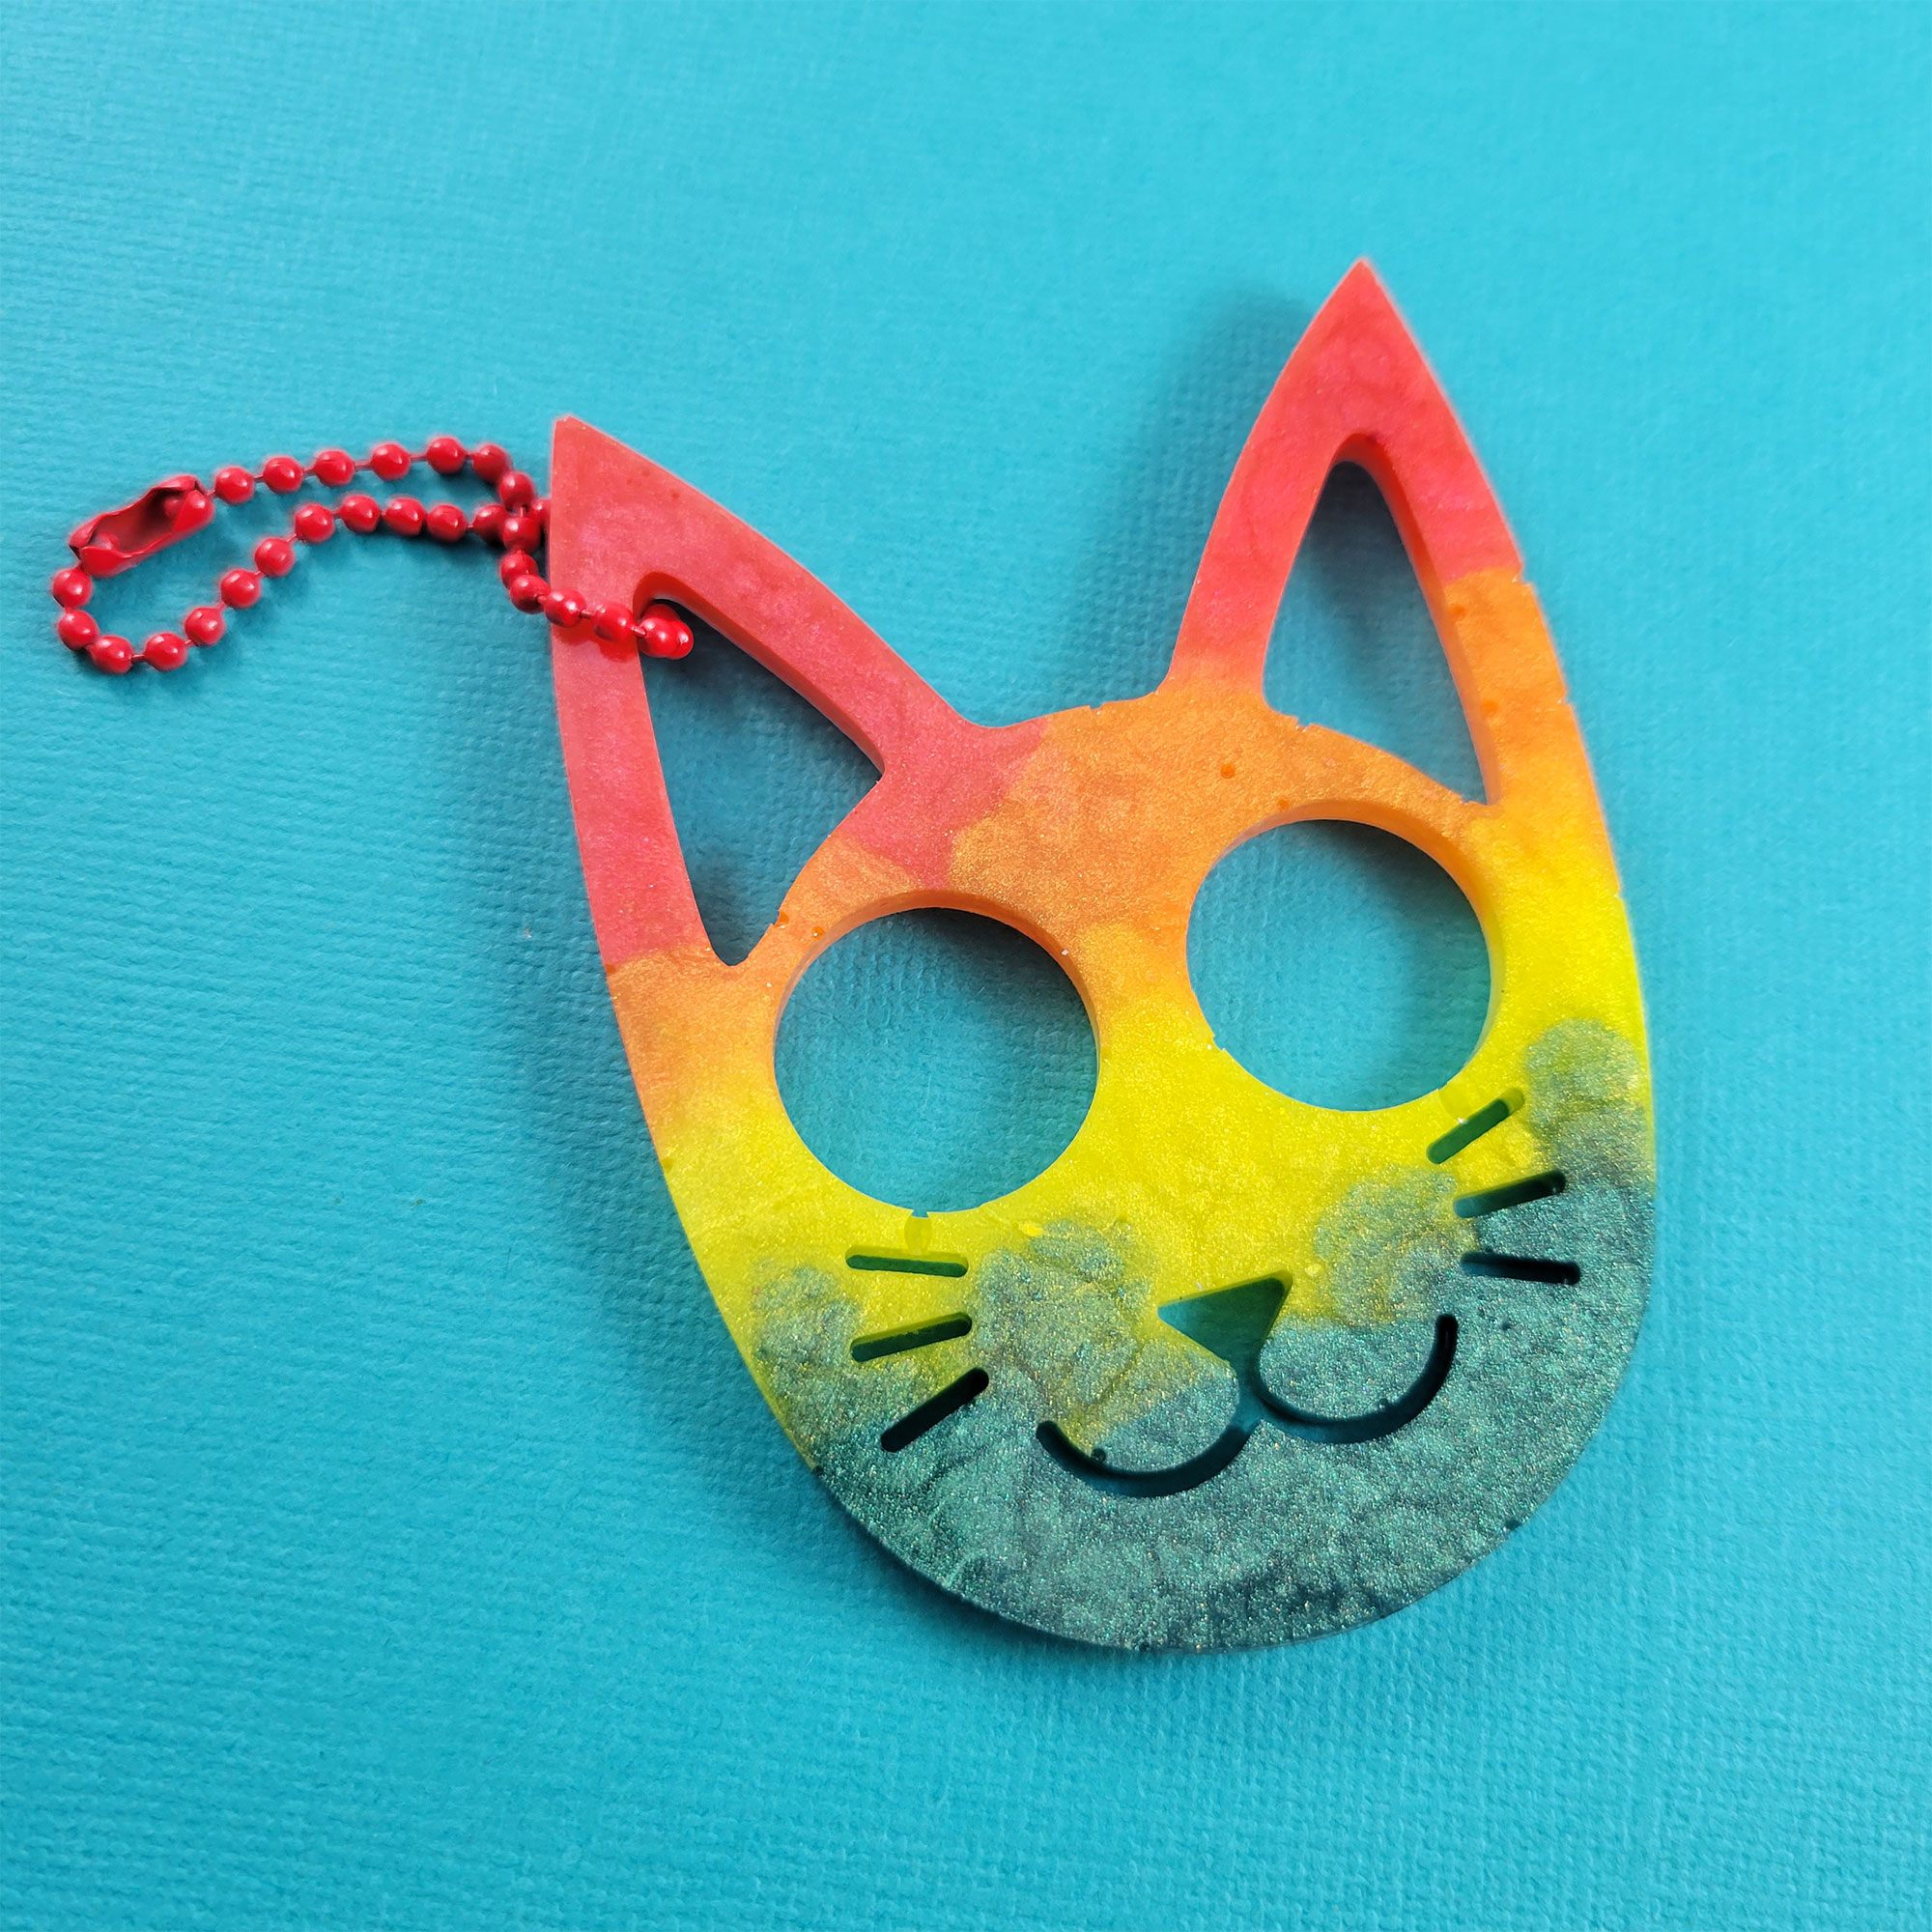 Kitty Cat Safety Keychain by Wilde Designs